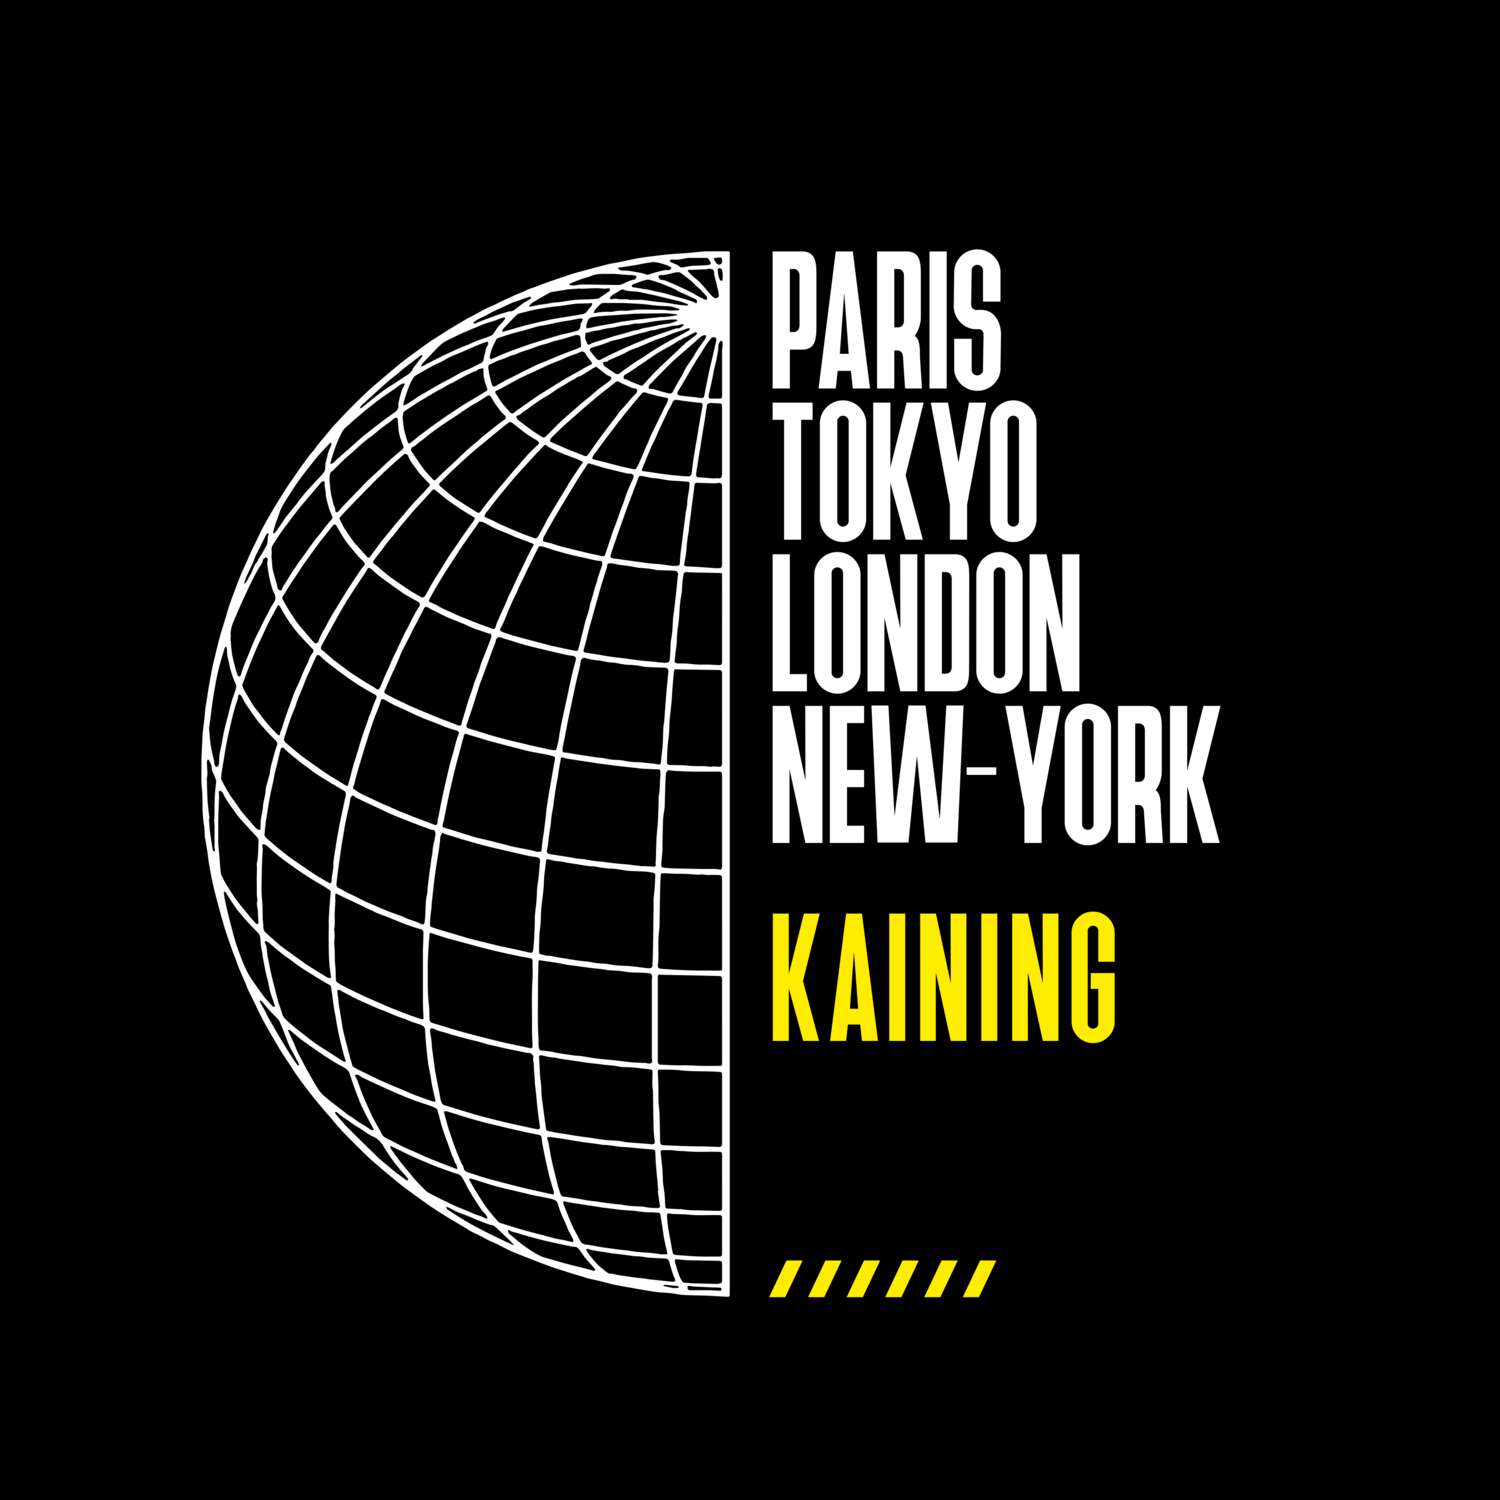 Kaining T-Shirt »Paris Tokyo London«